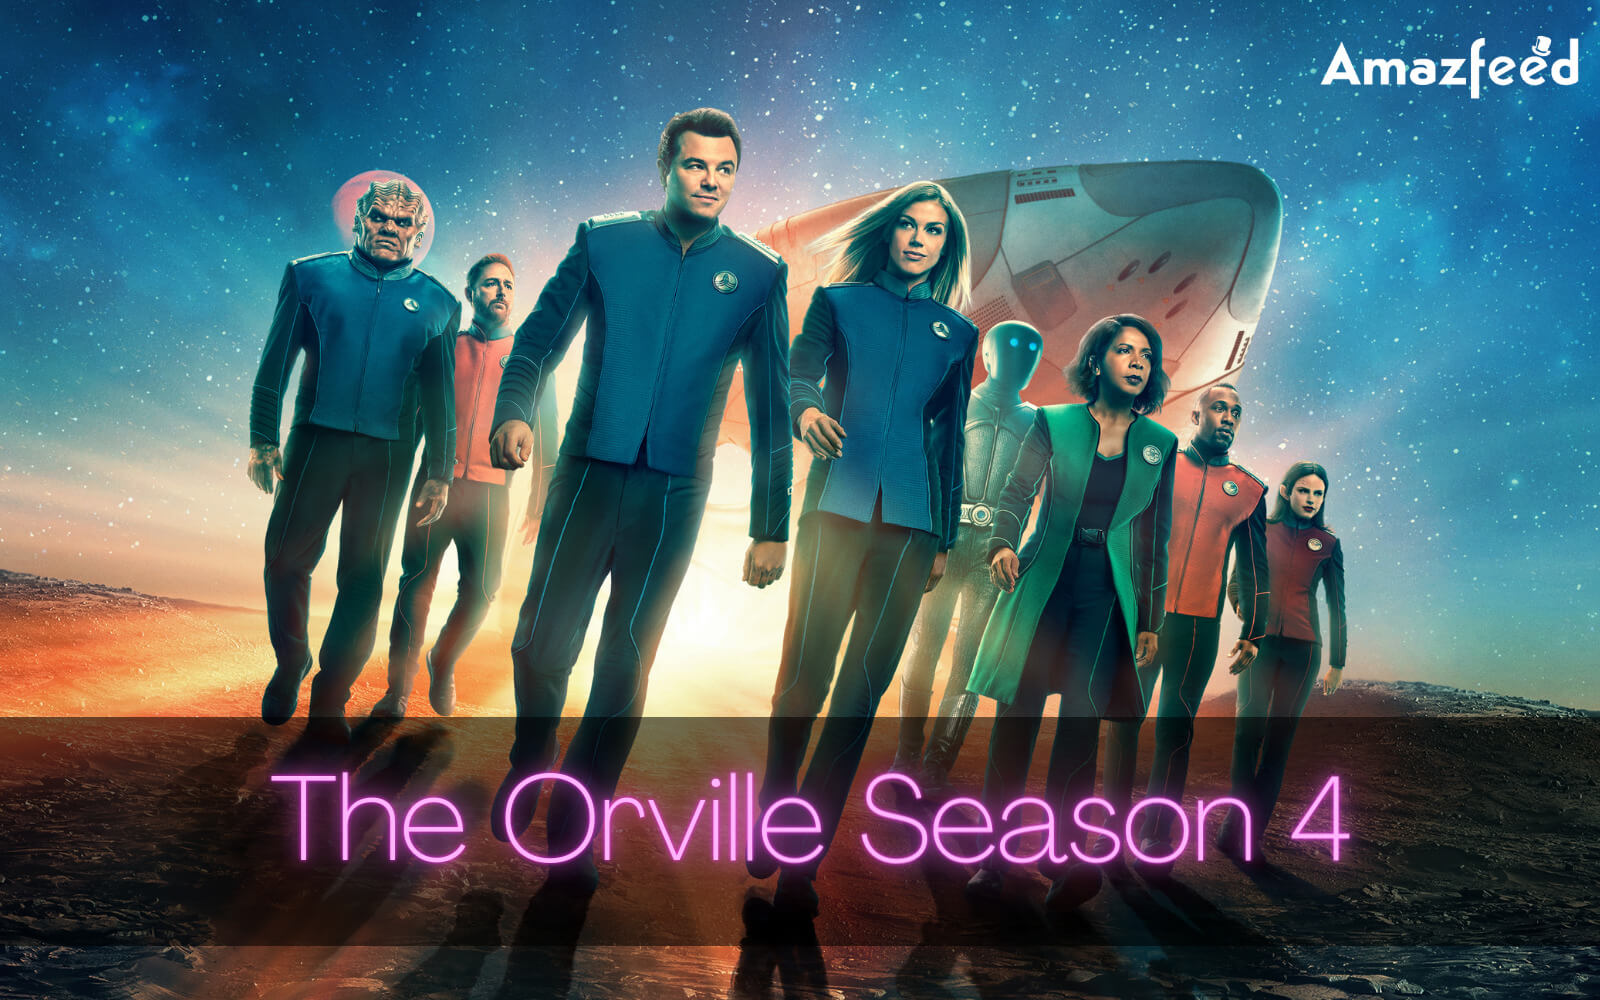 The Orville Season 4 release date